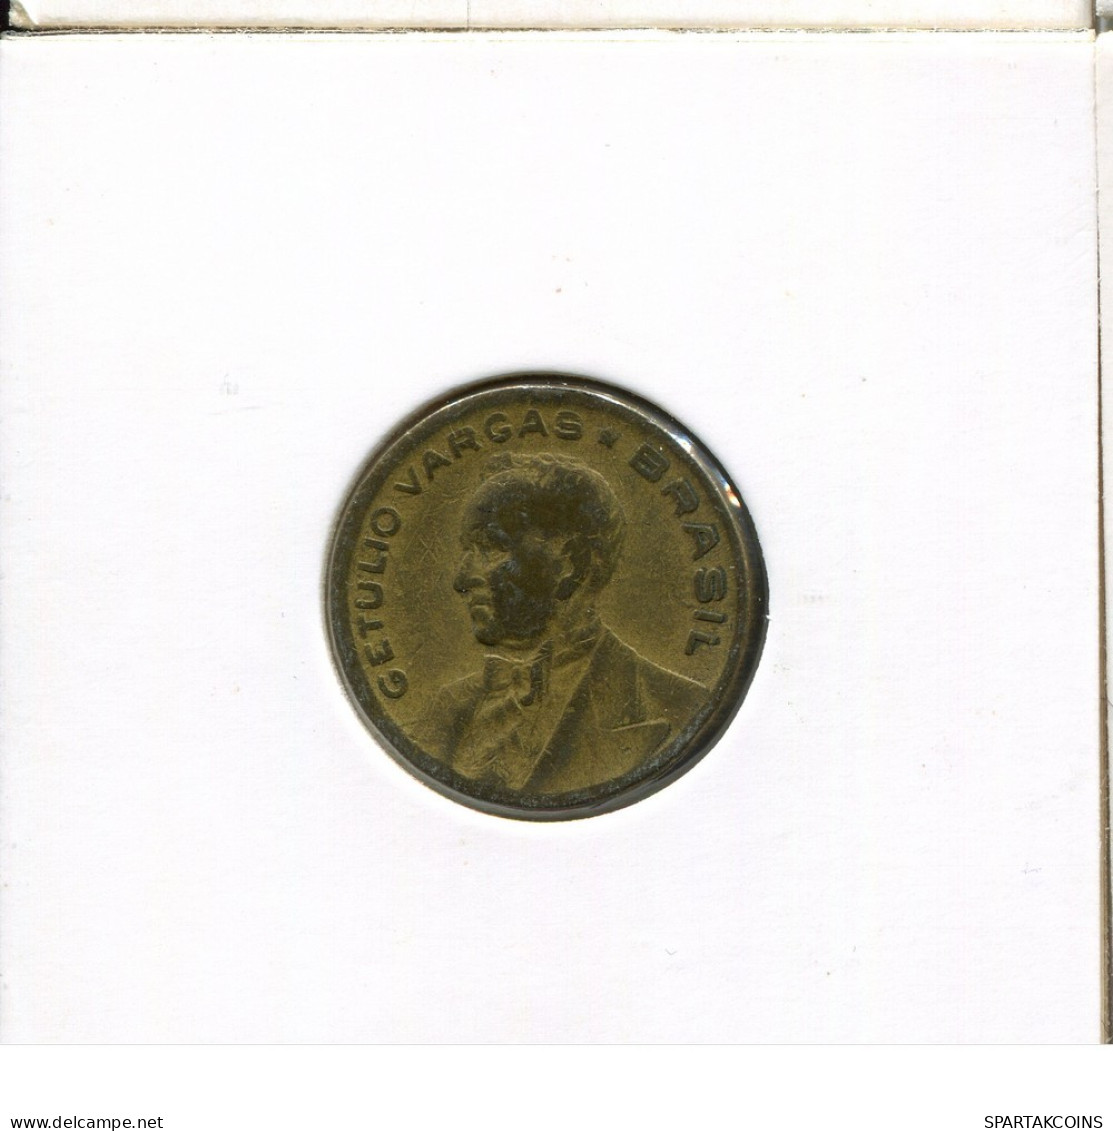 20 CENTAVOS 1945 BRAZIL Coin #AR305.U.A - Brazilië